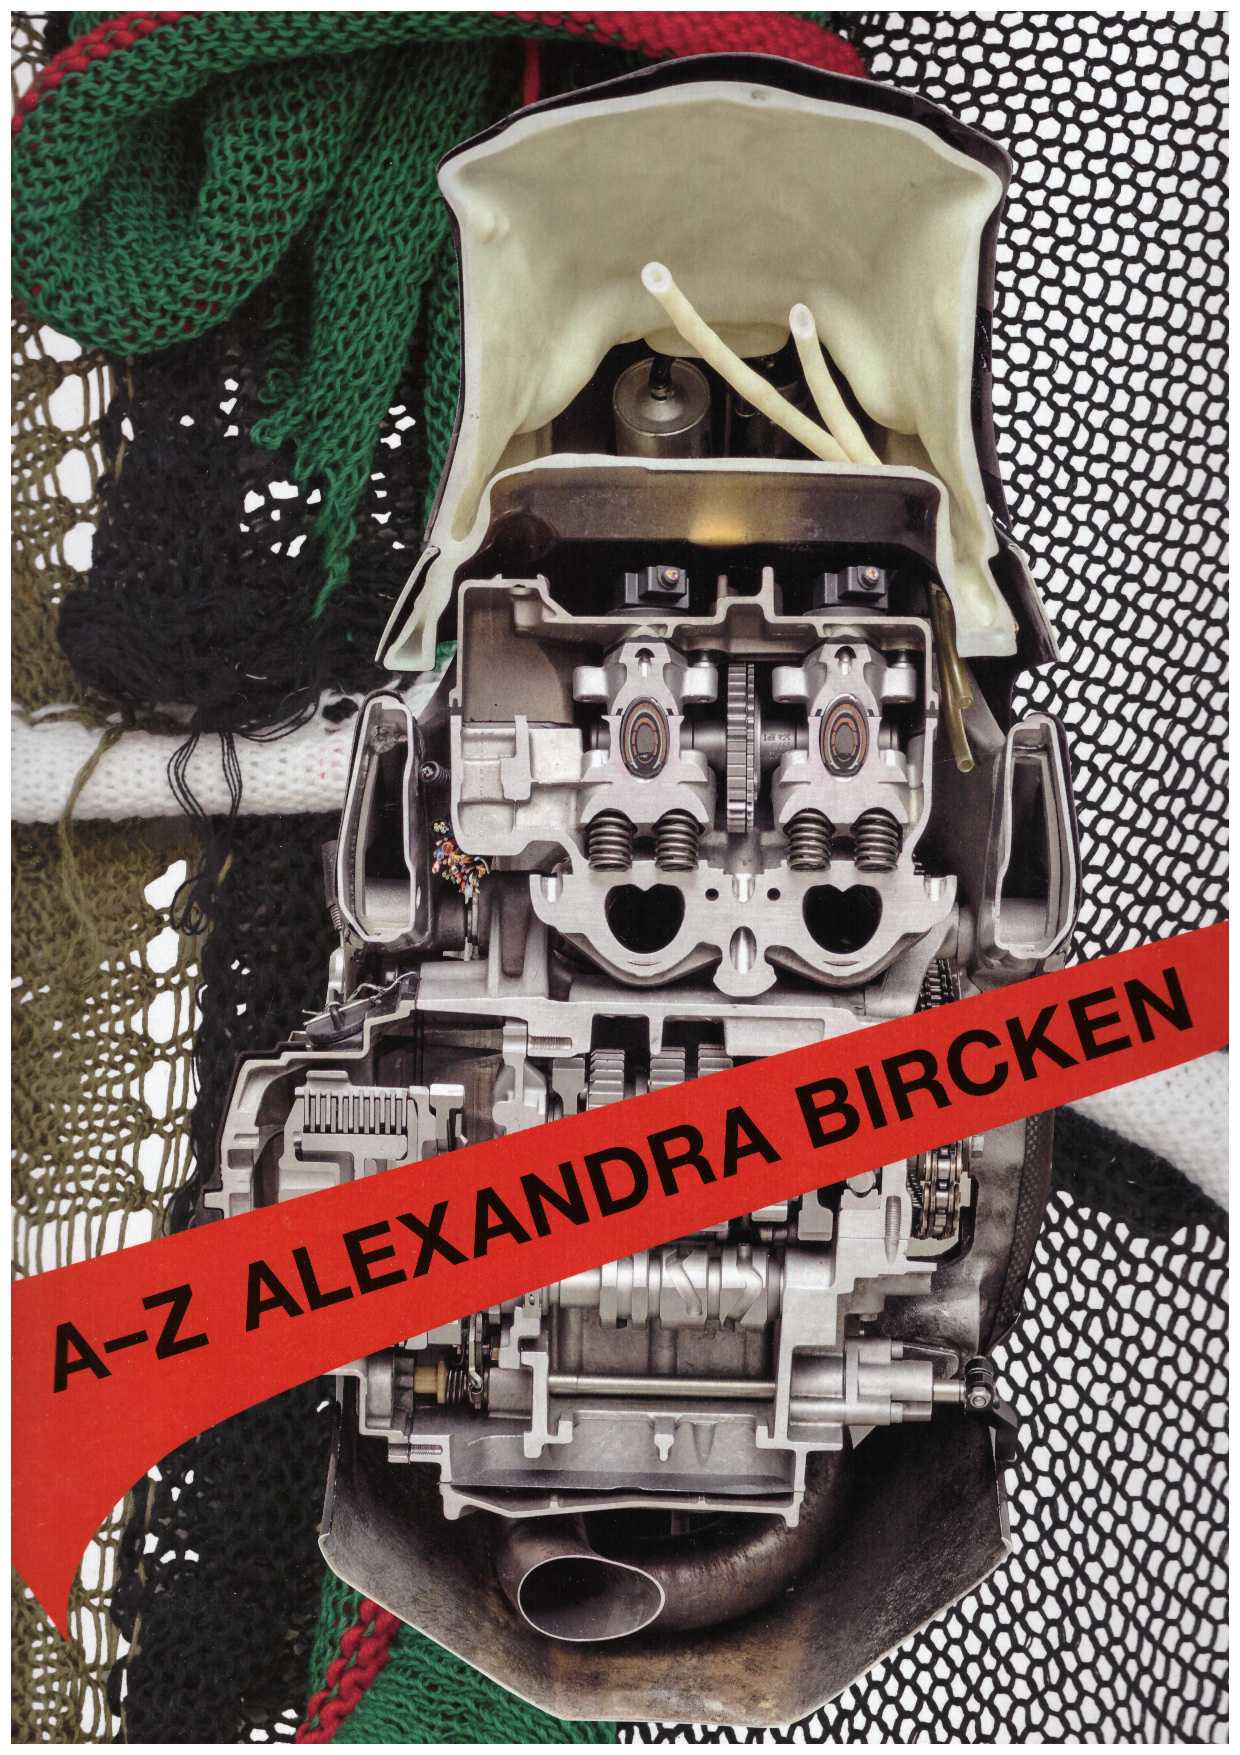 BIRCKEN, Alexandra - Alexandra Bircken. A-Z